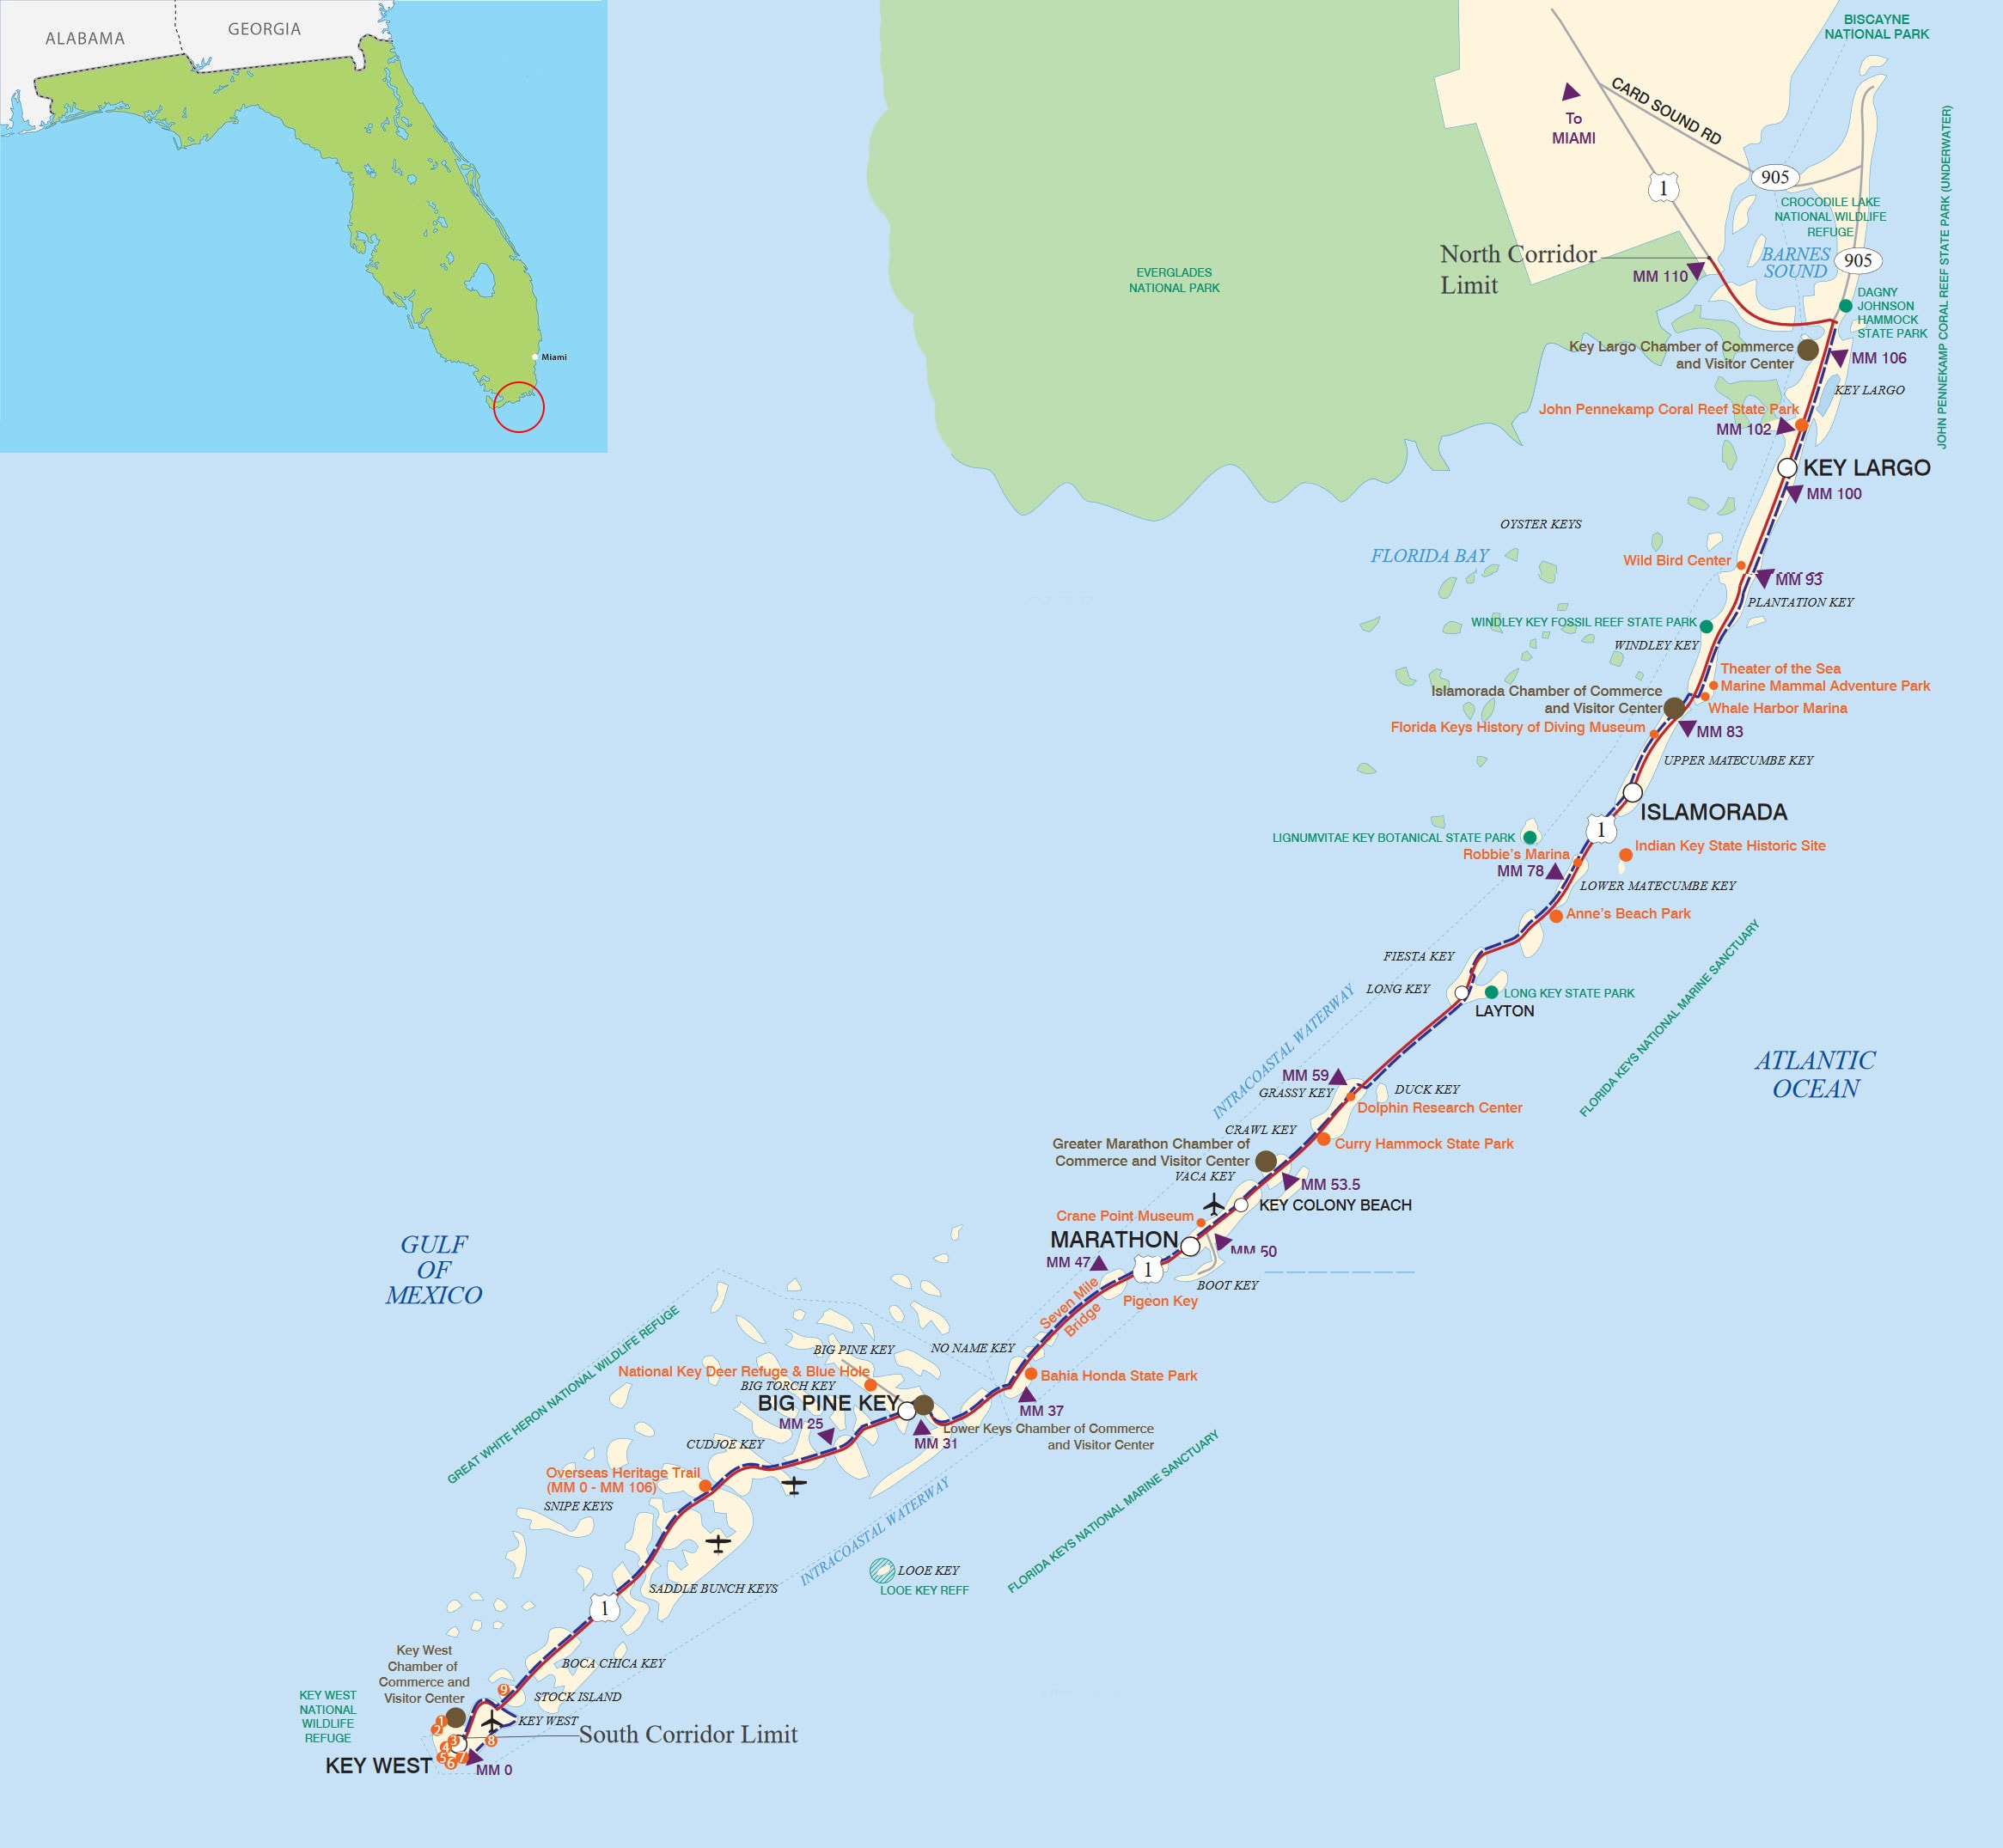 Florida Keys, Map, Overseas Highway, US 1, Map, Travel report